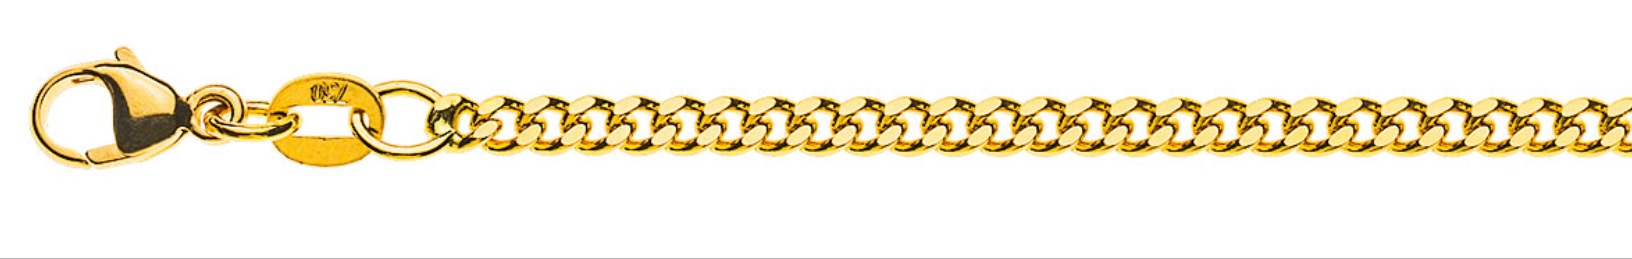 AURONOS Prestige Necklace yellow gold 18K curb chain polished 42cm 2.6mm